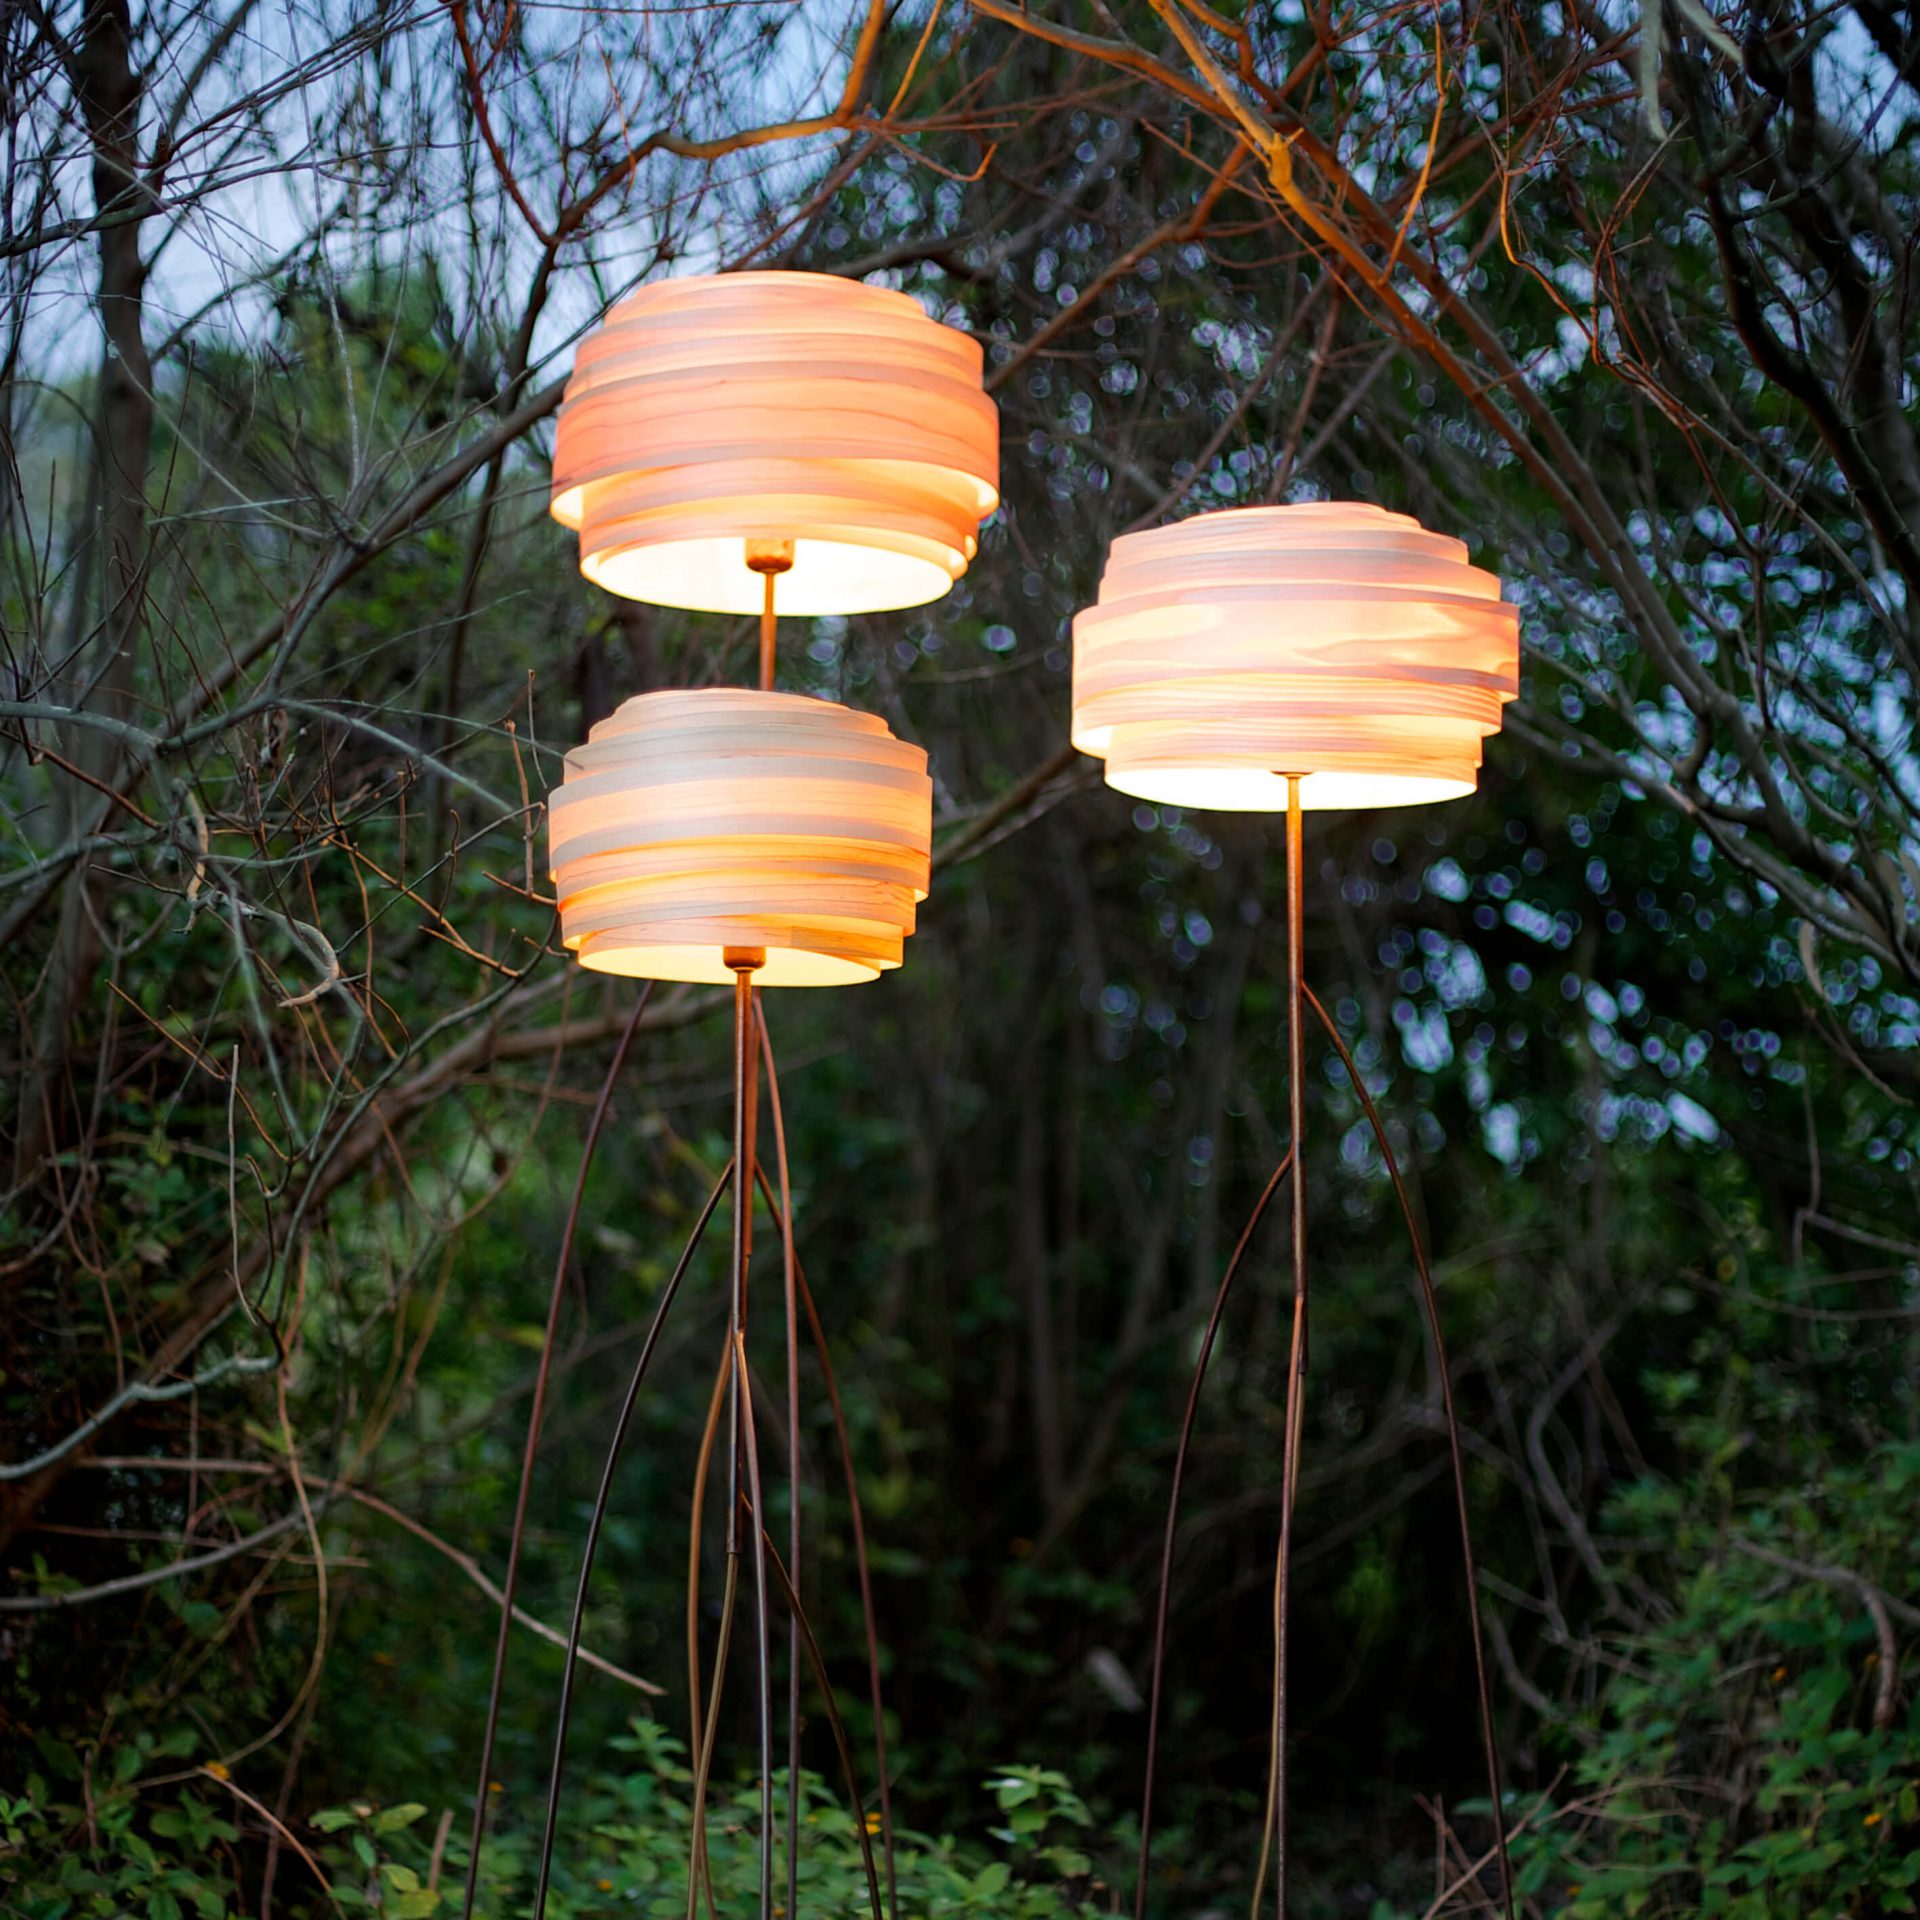 Rosa lampshade by Studio vayehi